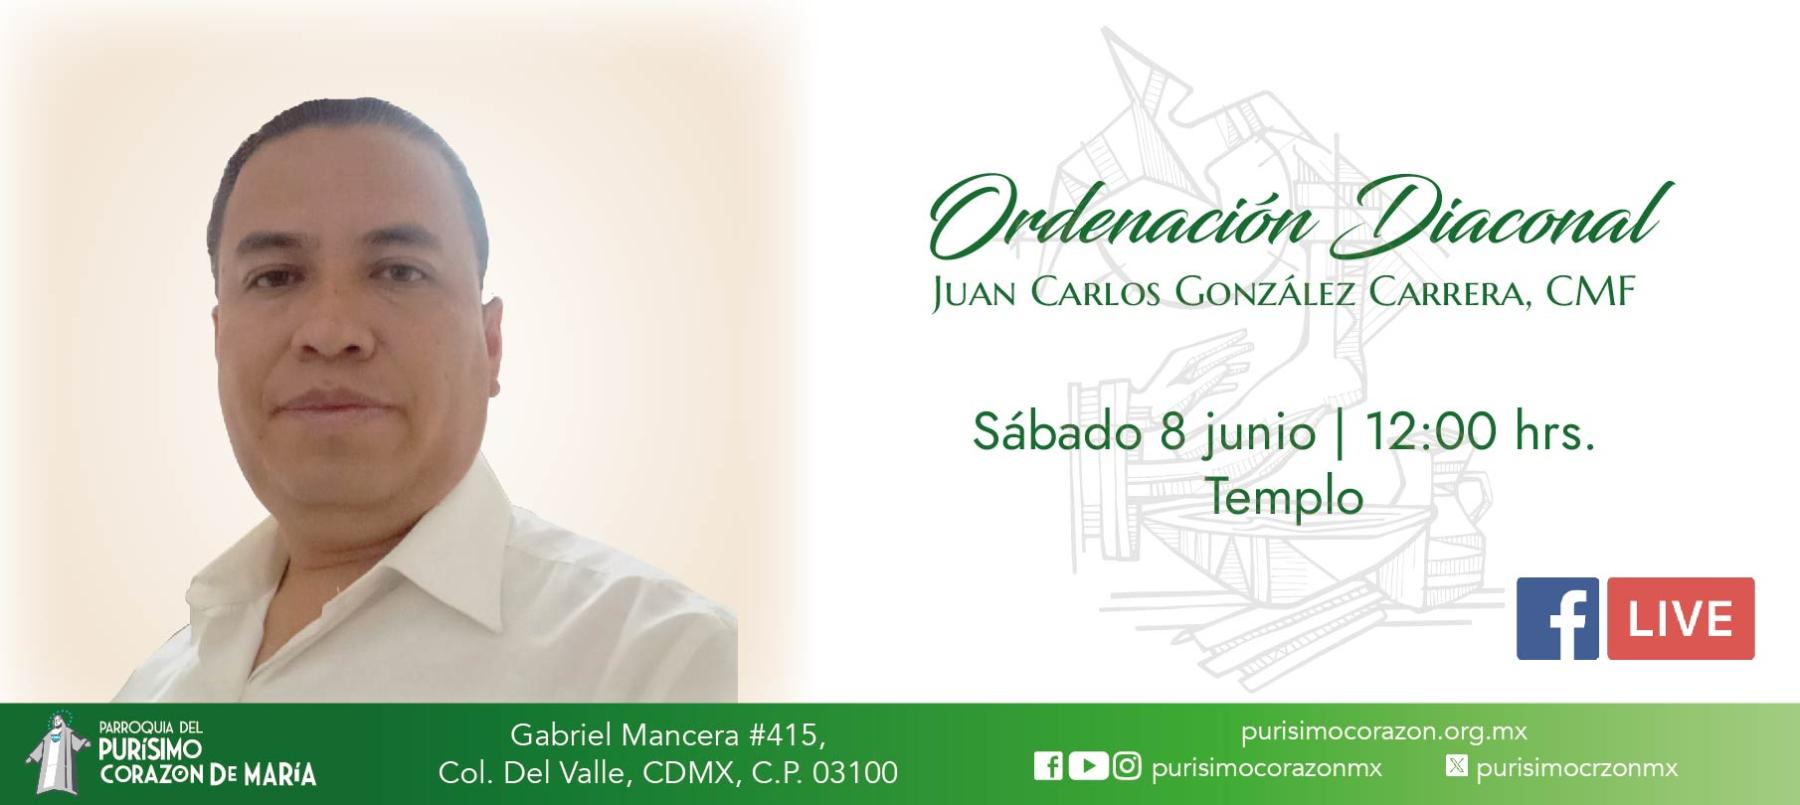 Ordenación Diaconal de Juan Carlos González Carrera, CMF